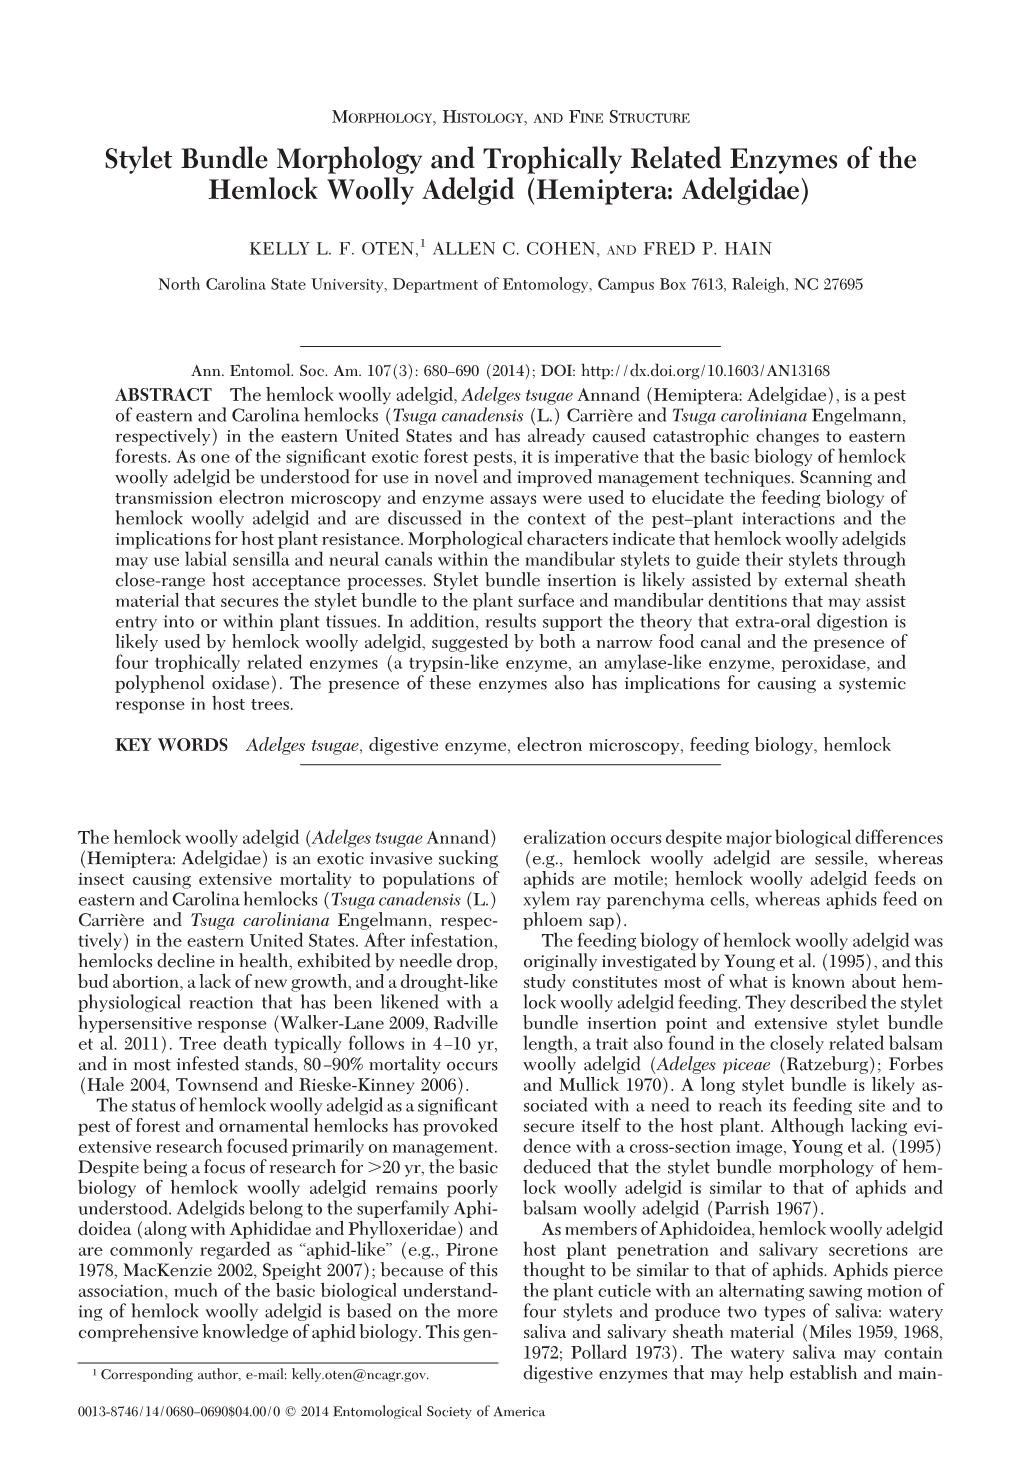 Stylet Bundle Morphology and Trophically Related Enzymes of the Hemlock Woolly Adelgid (Hemiptera: Adelgidae)